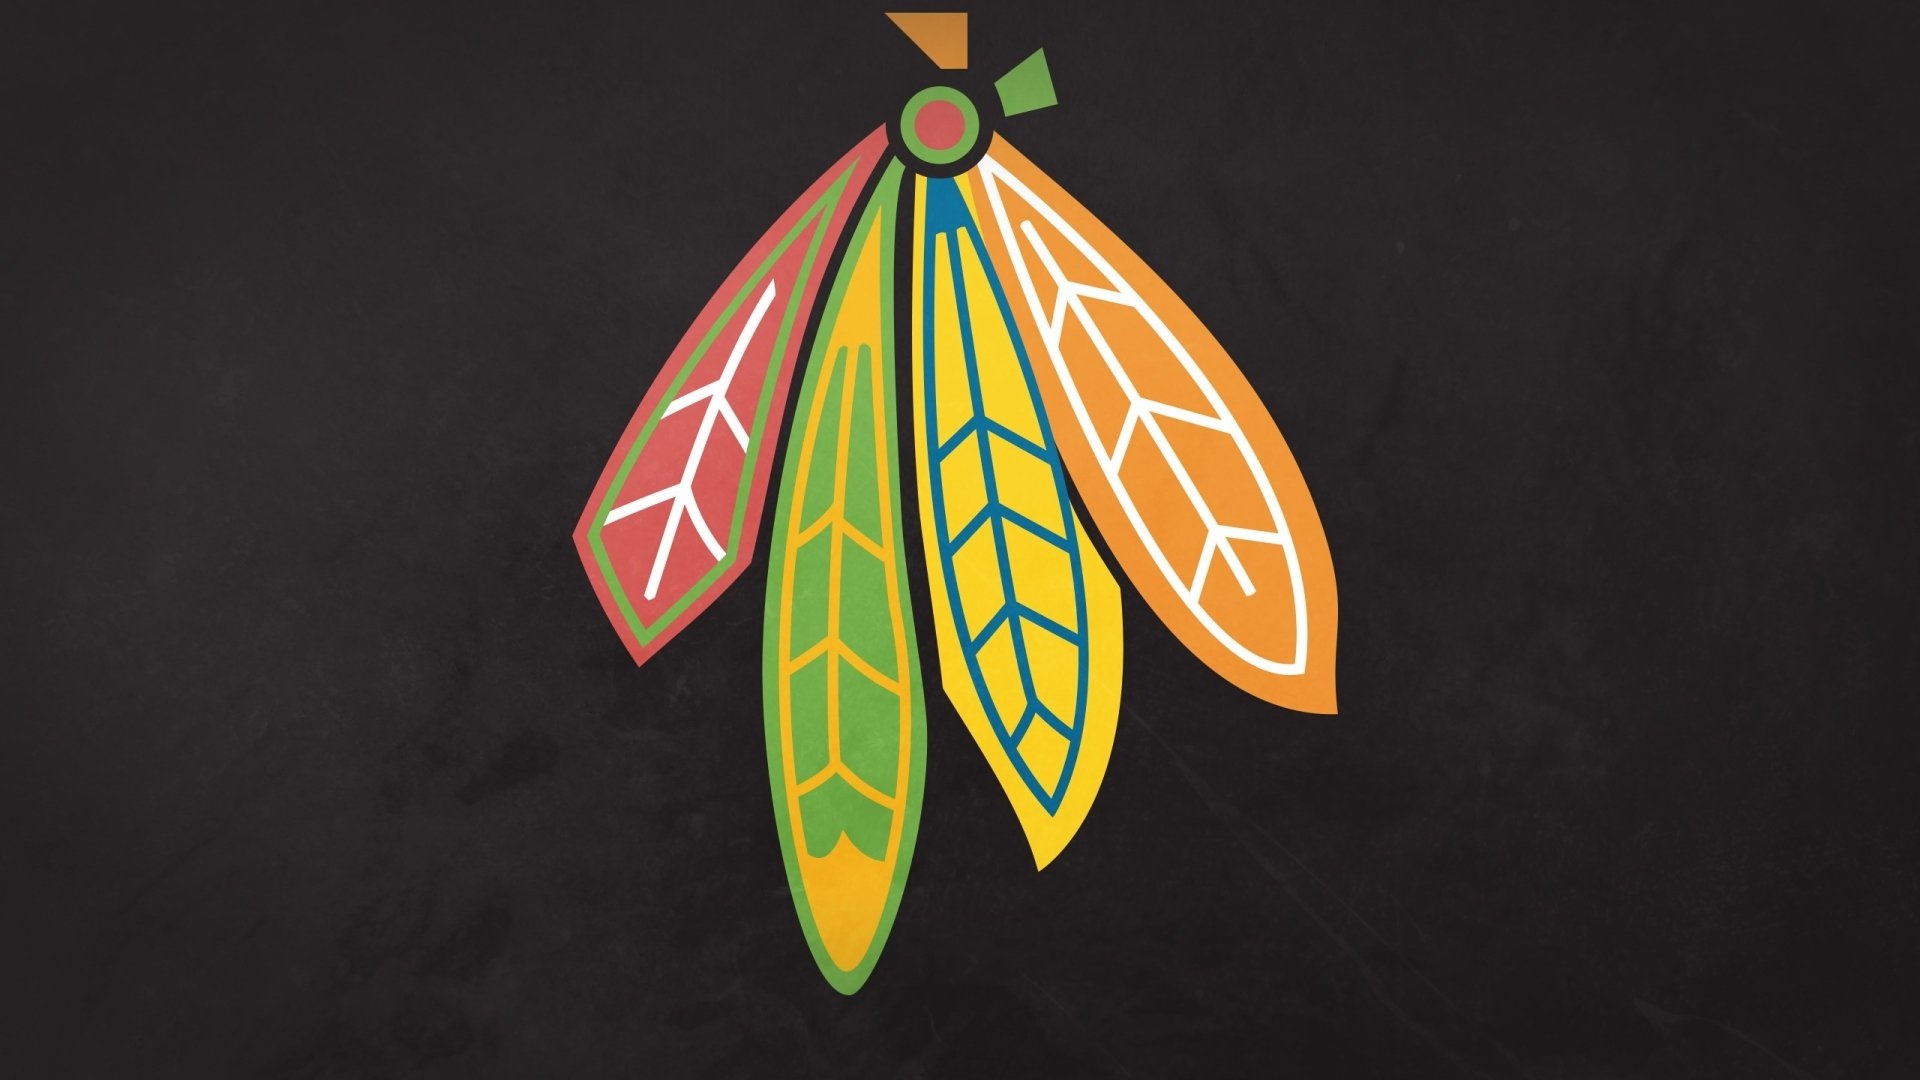 Chicago Blackhawks: Symbol, Ice hockey, Team, Illinois. 1920x1080 Full HD Wallpaper.